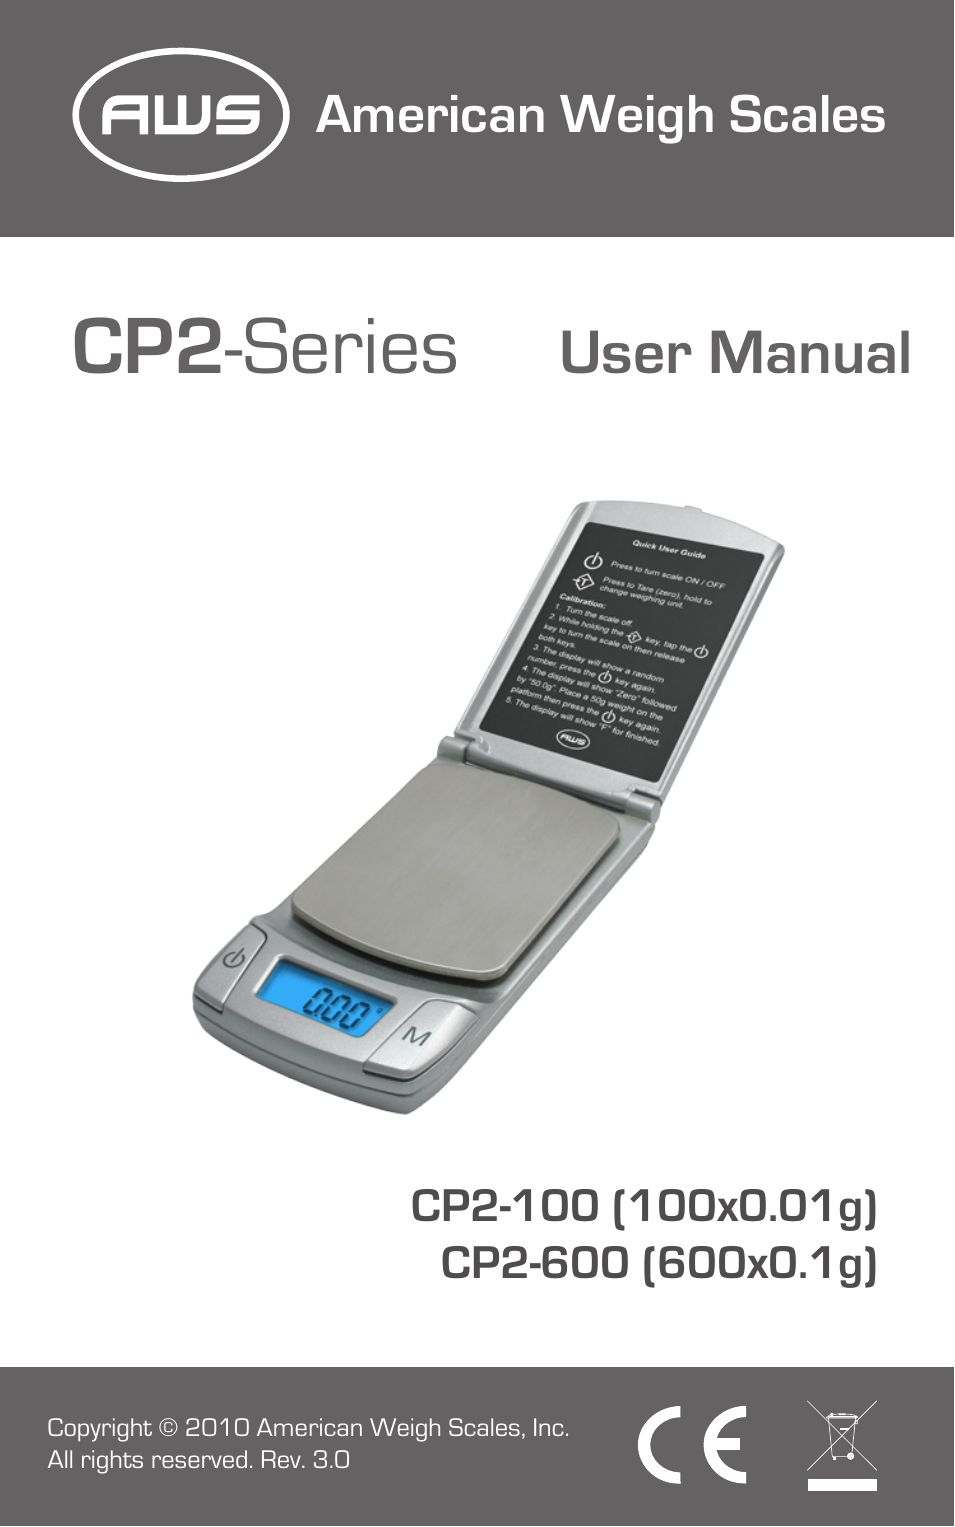 CP2-600